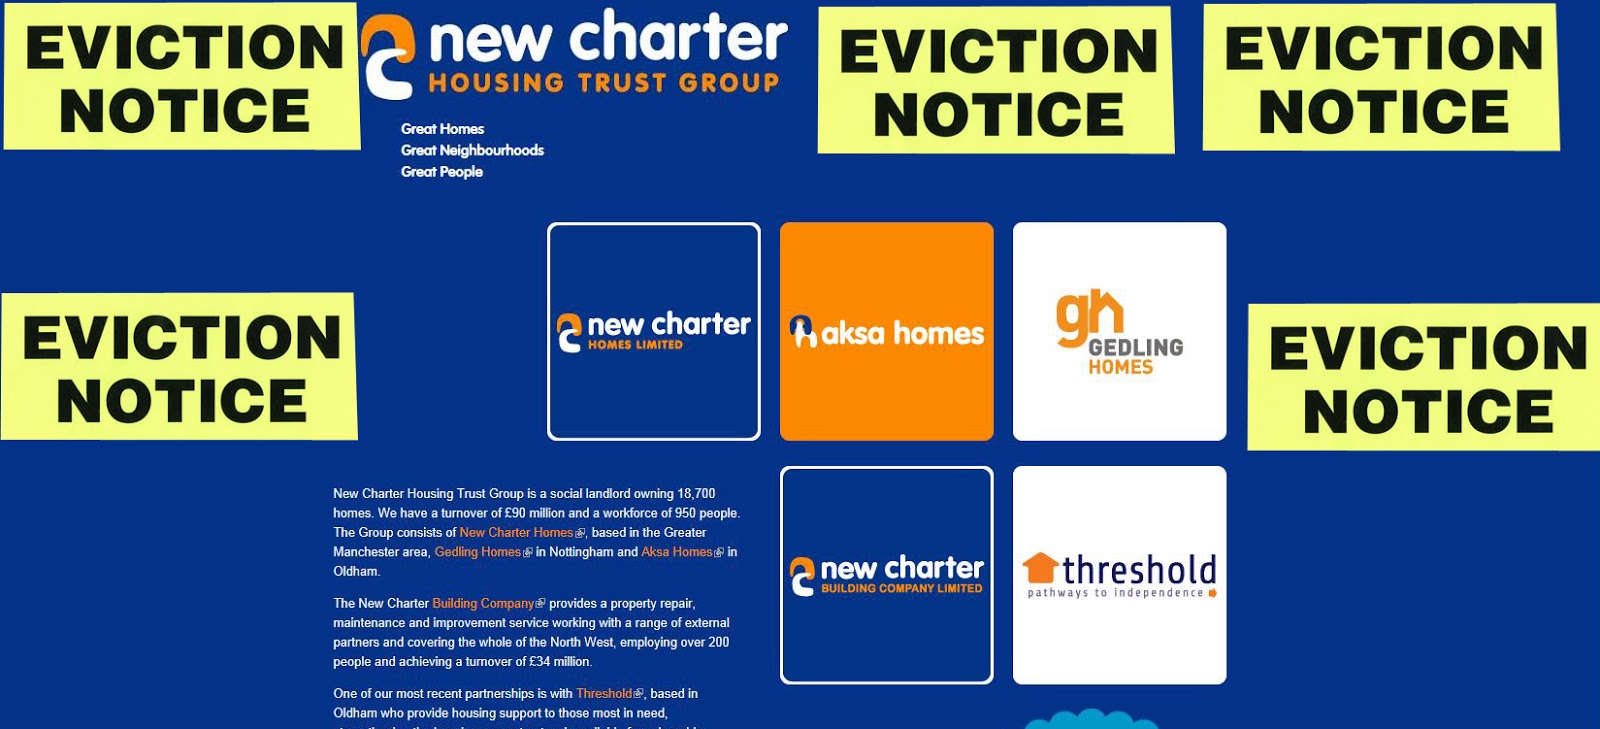 Tameside Citizen: New Charter Housing Eviction Hearing